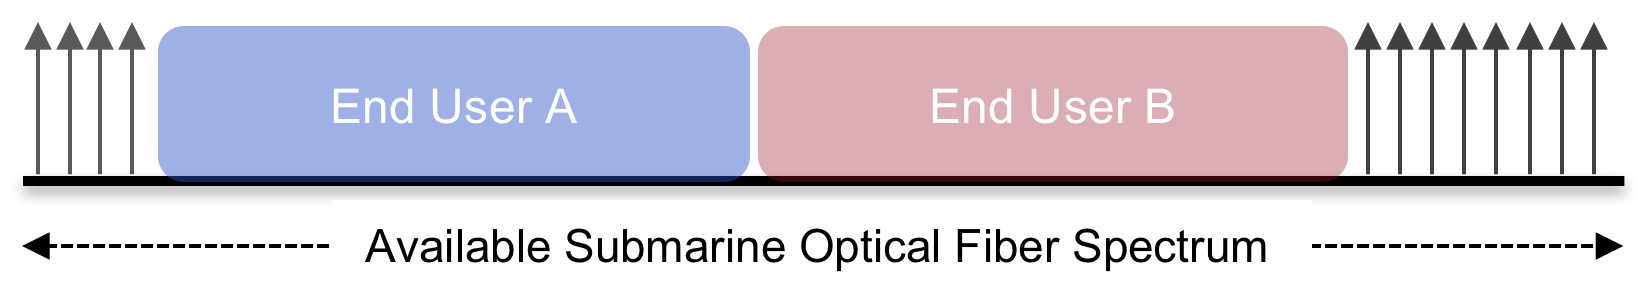 Virtualizing Submarine Cable Fibers via Spectrum Sharing